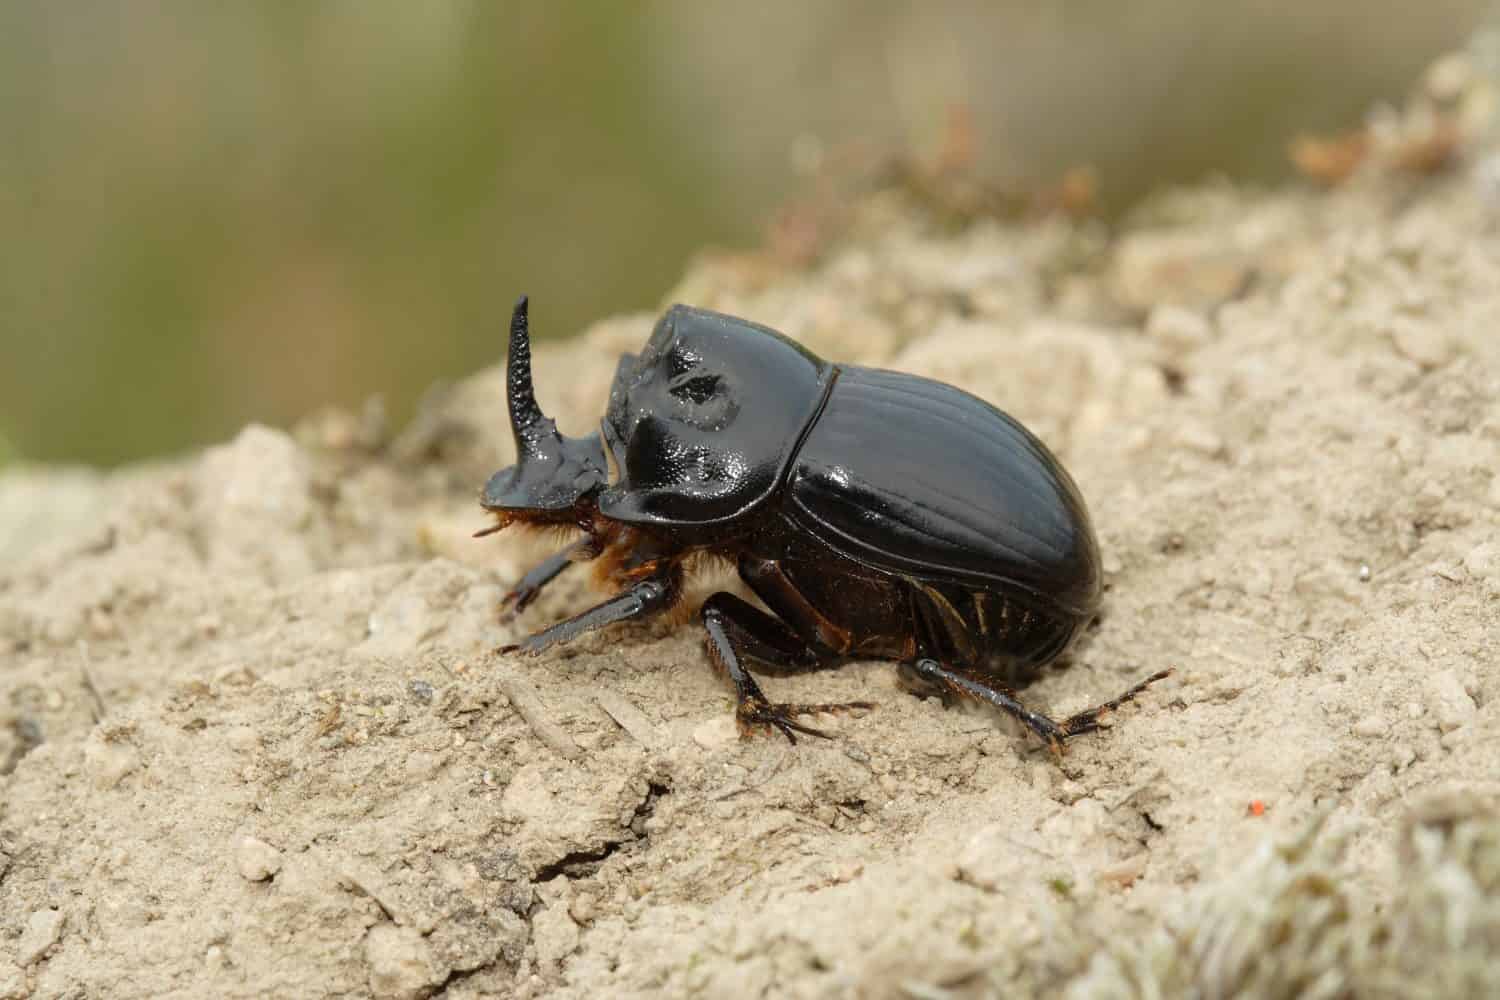 Copris lunaris, scarabeo stercorario cornuto, Scarabaeidae, maschio con corno nasale,